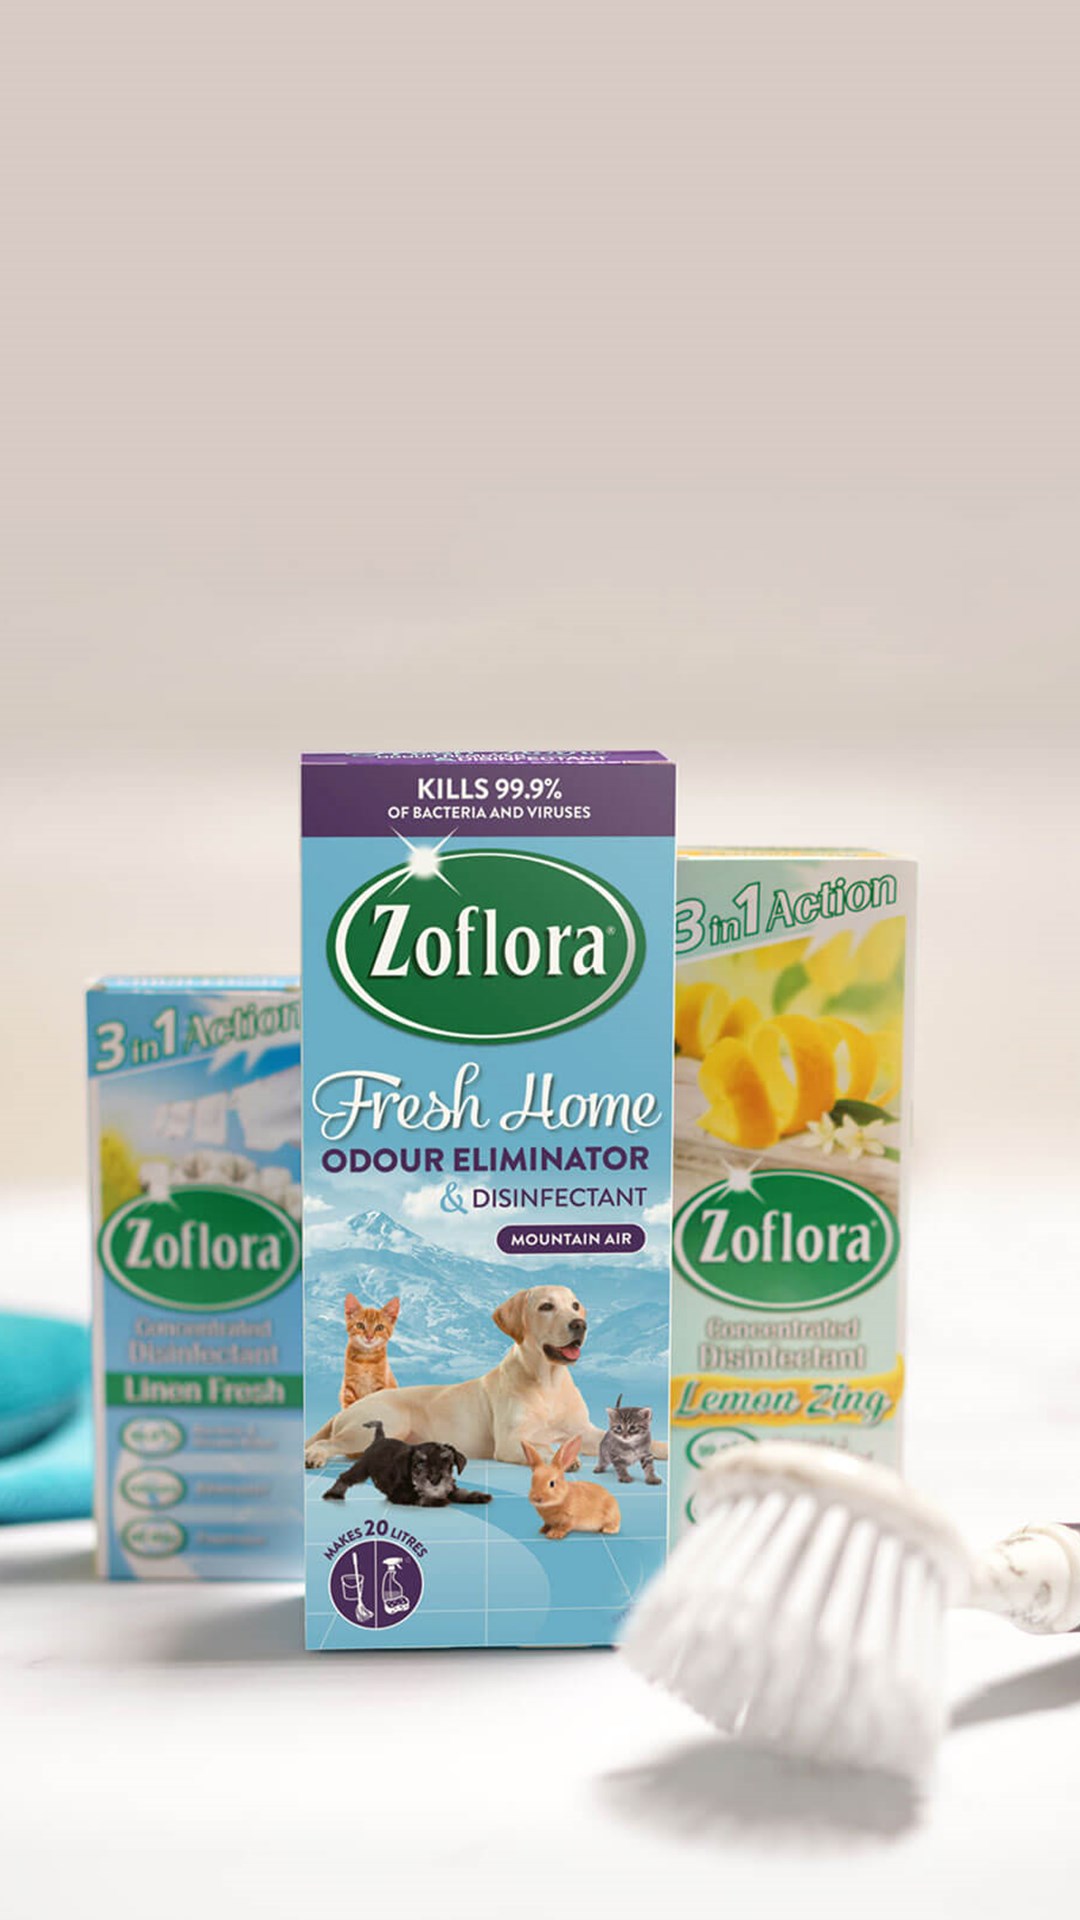 Zolflora products next to white washing brush